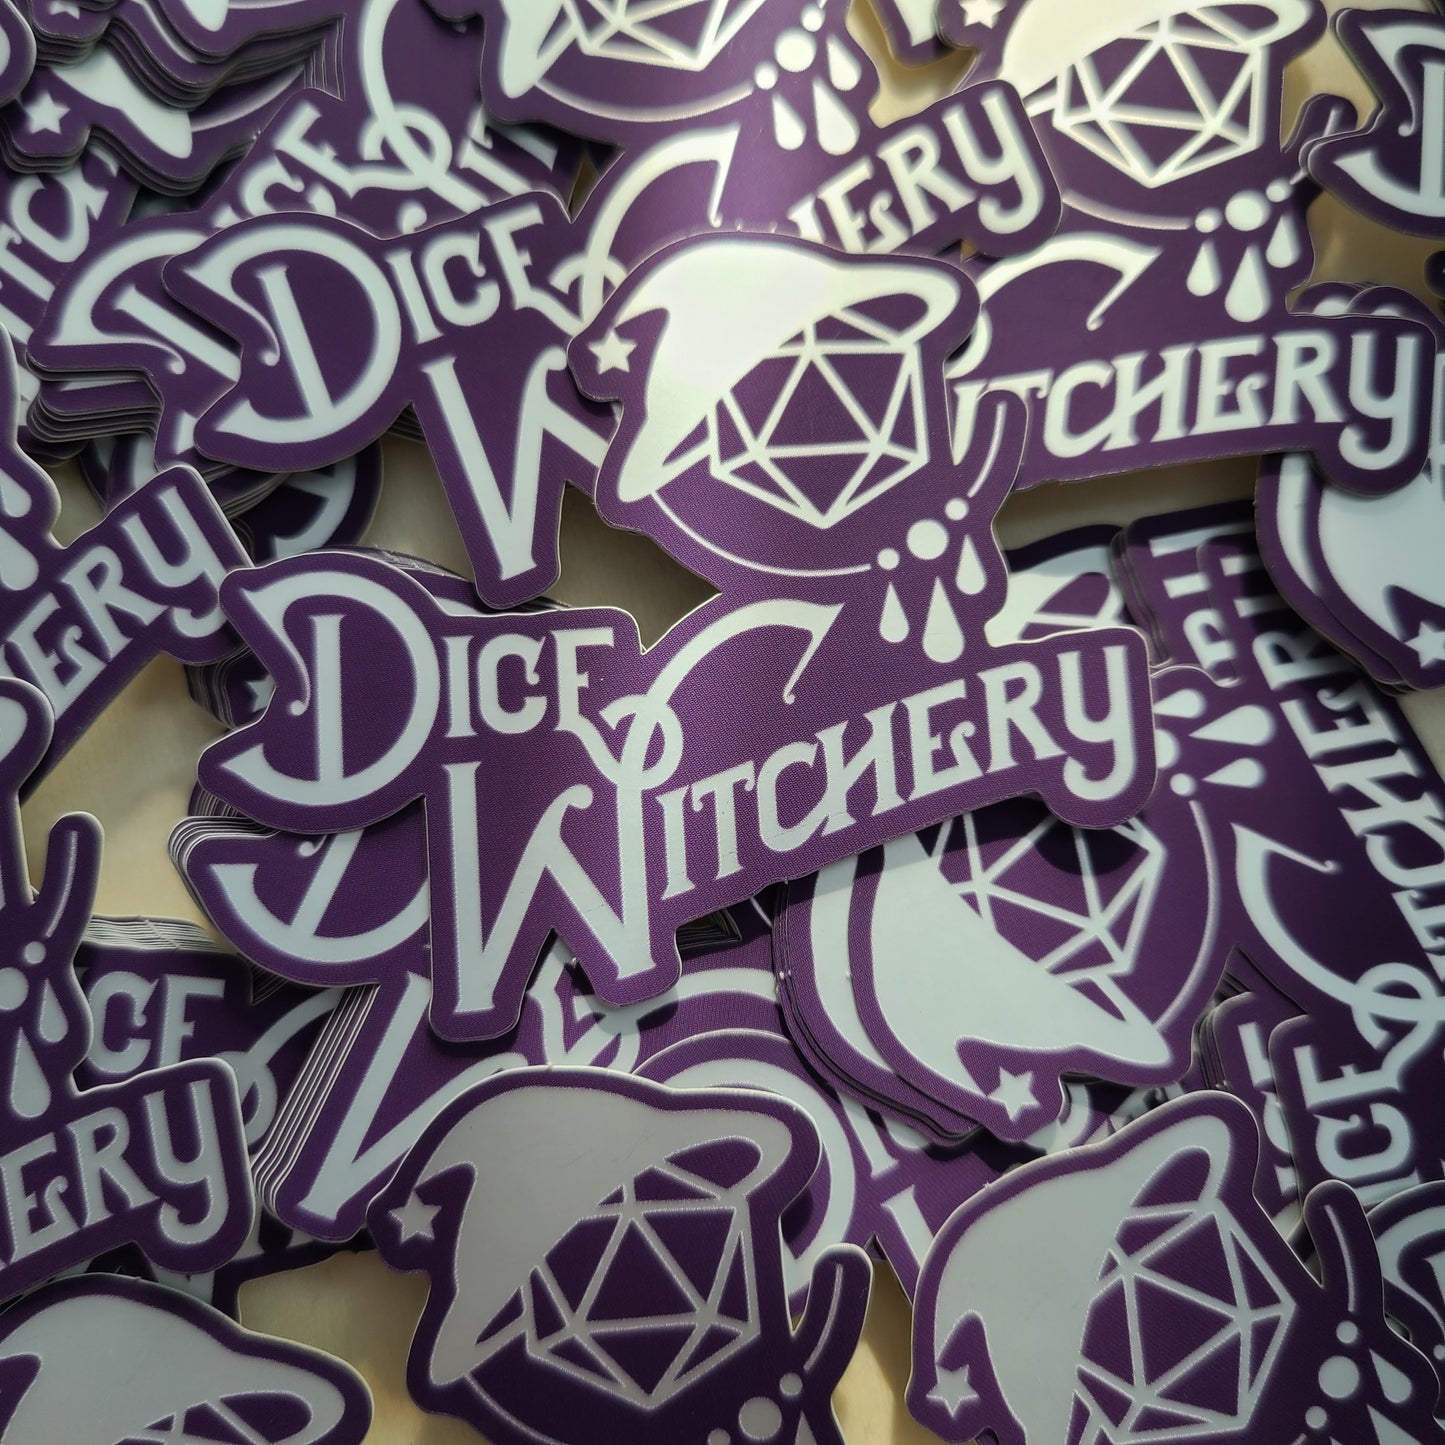 Dice Witchery matte logo sticker